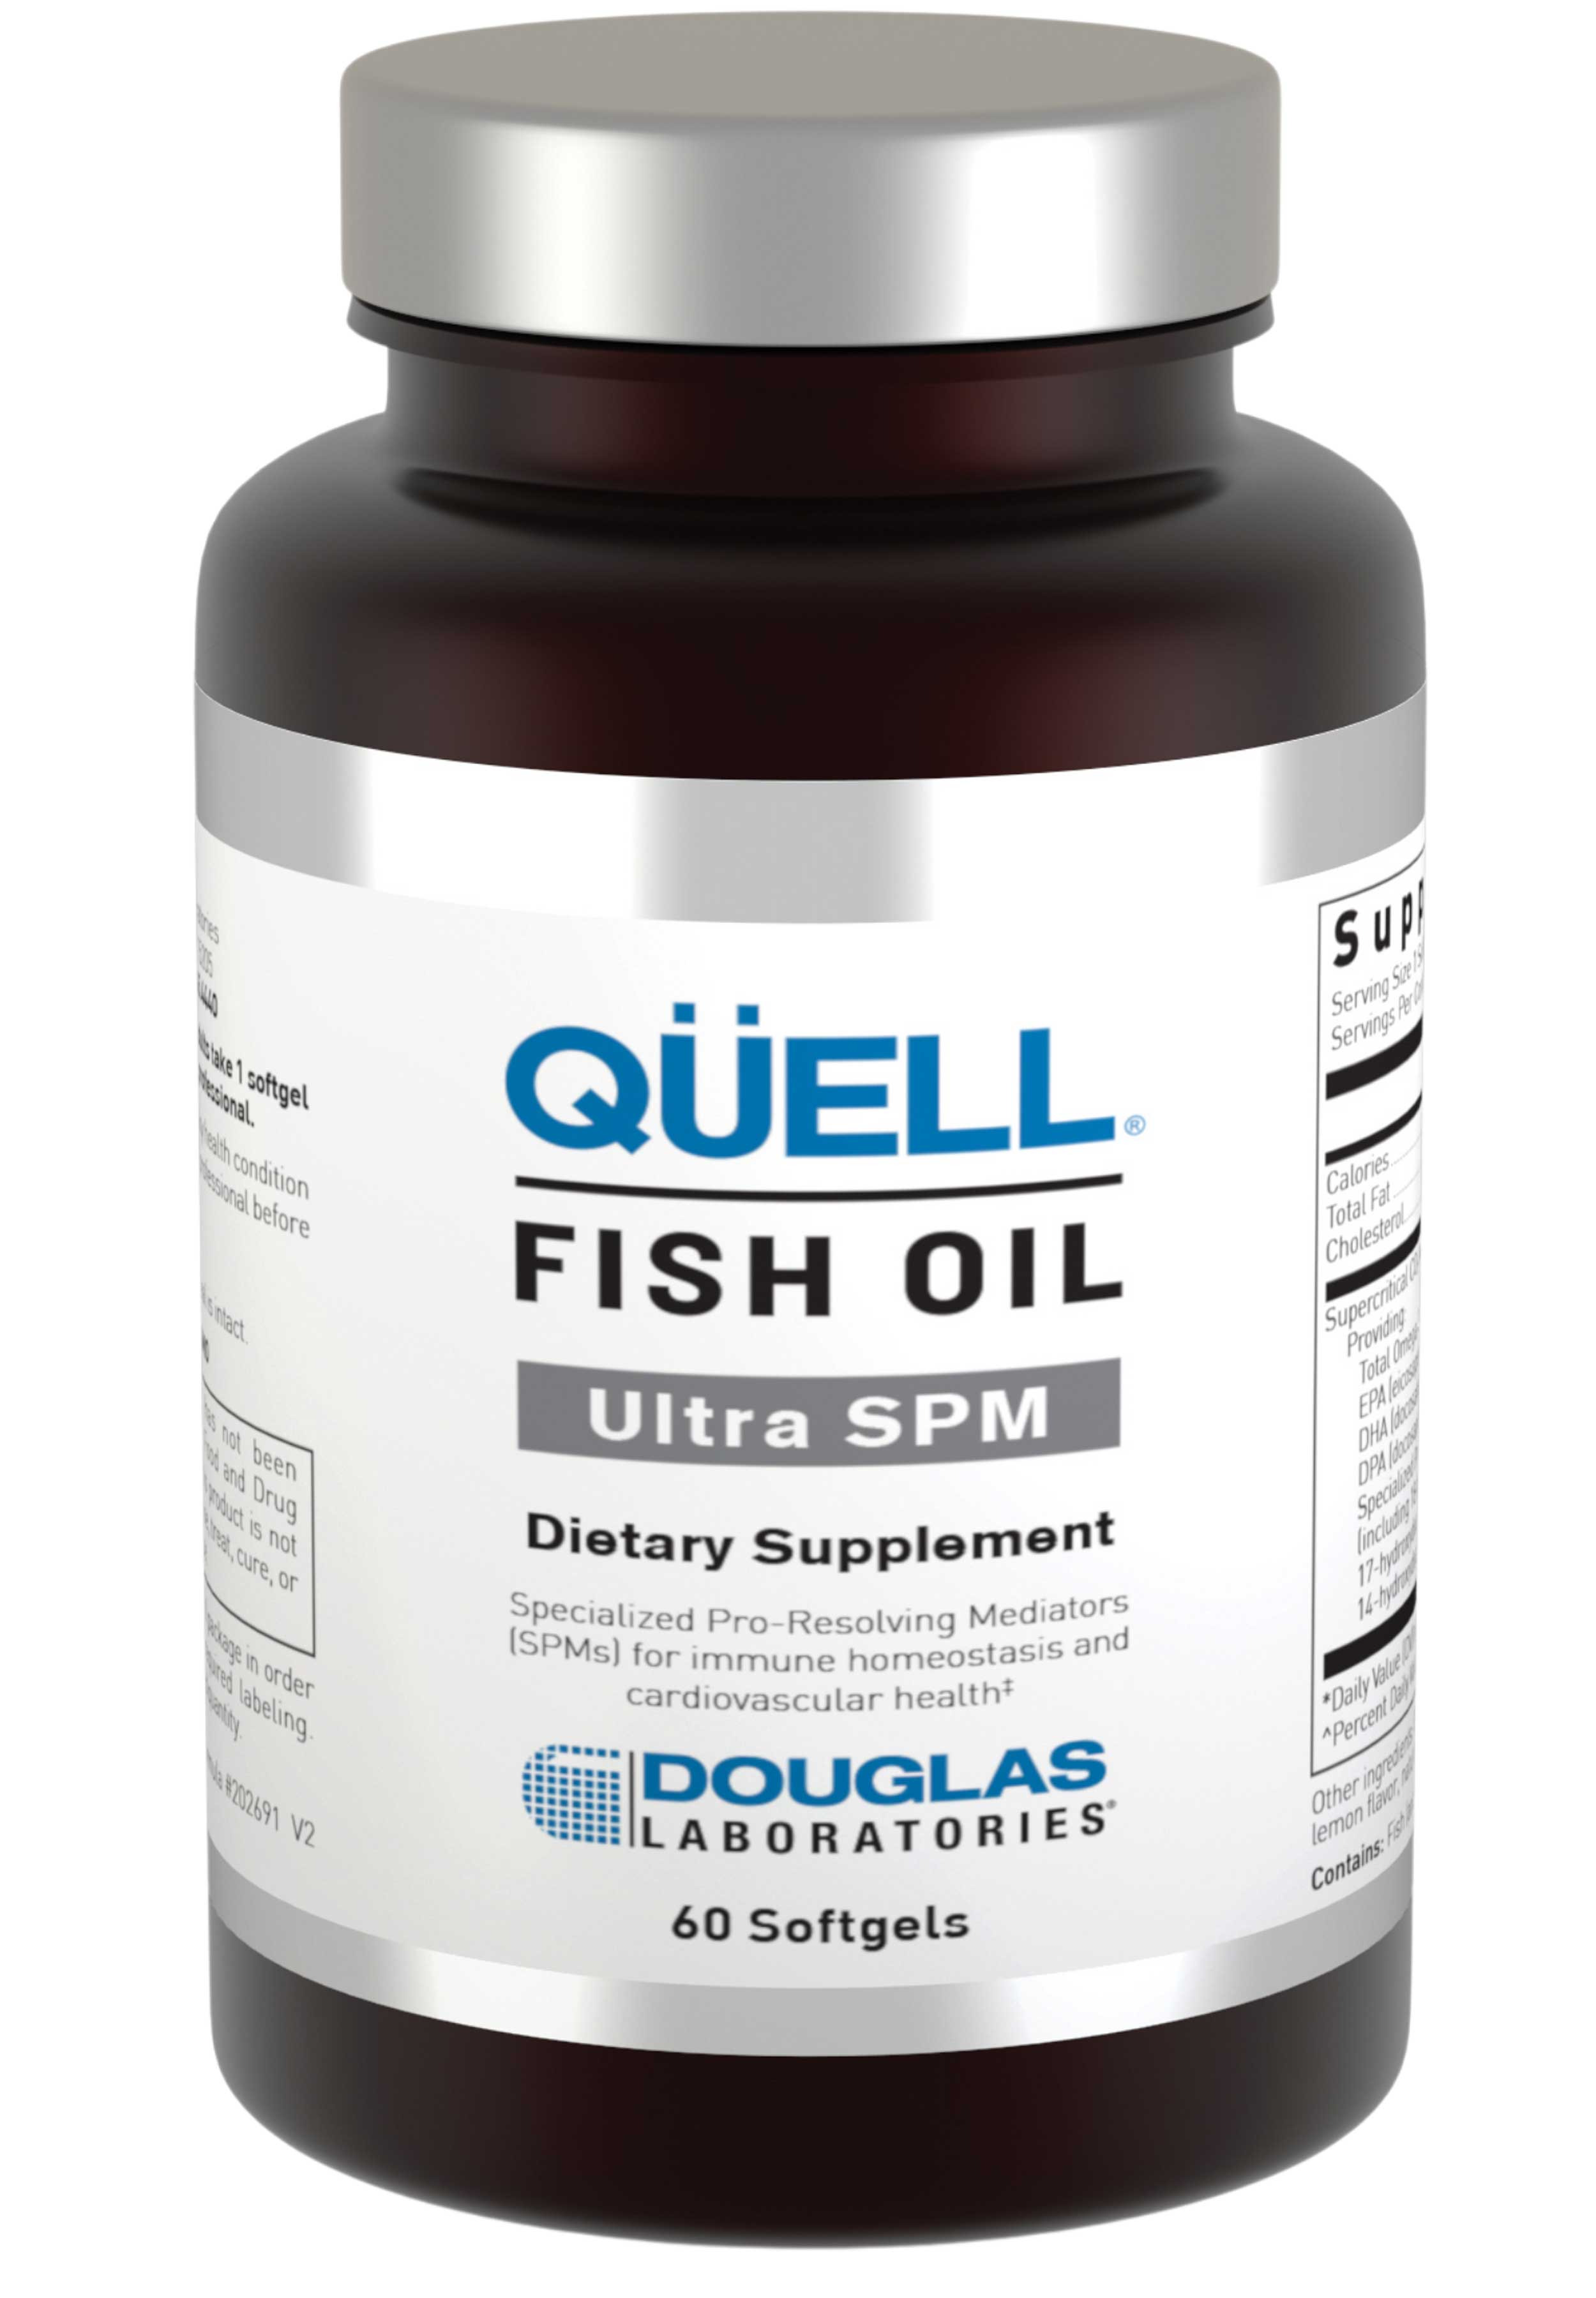 Douglas Laboratories QÜELL Fish Oil Ultra SPM